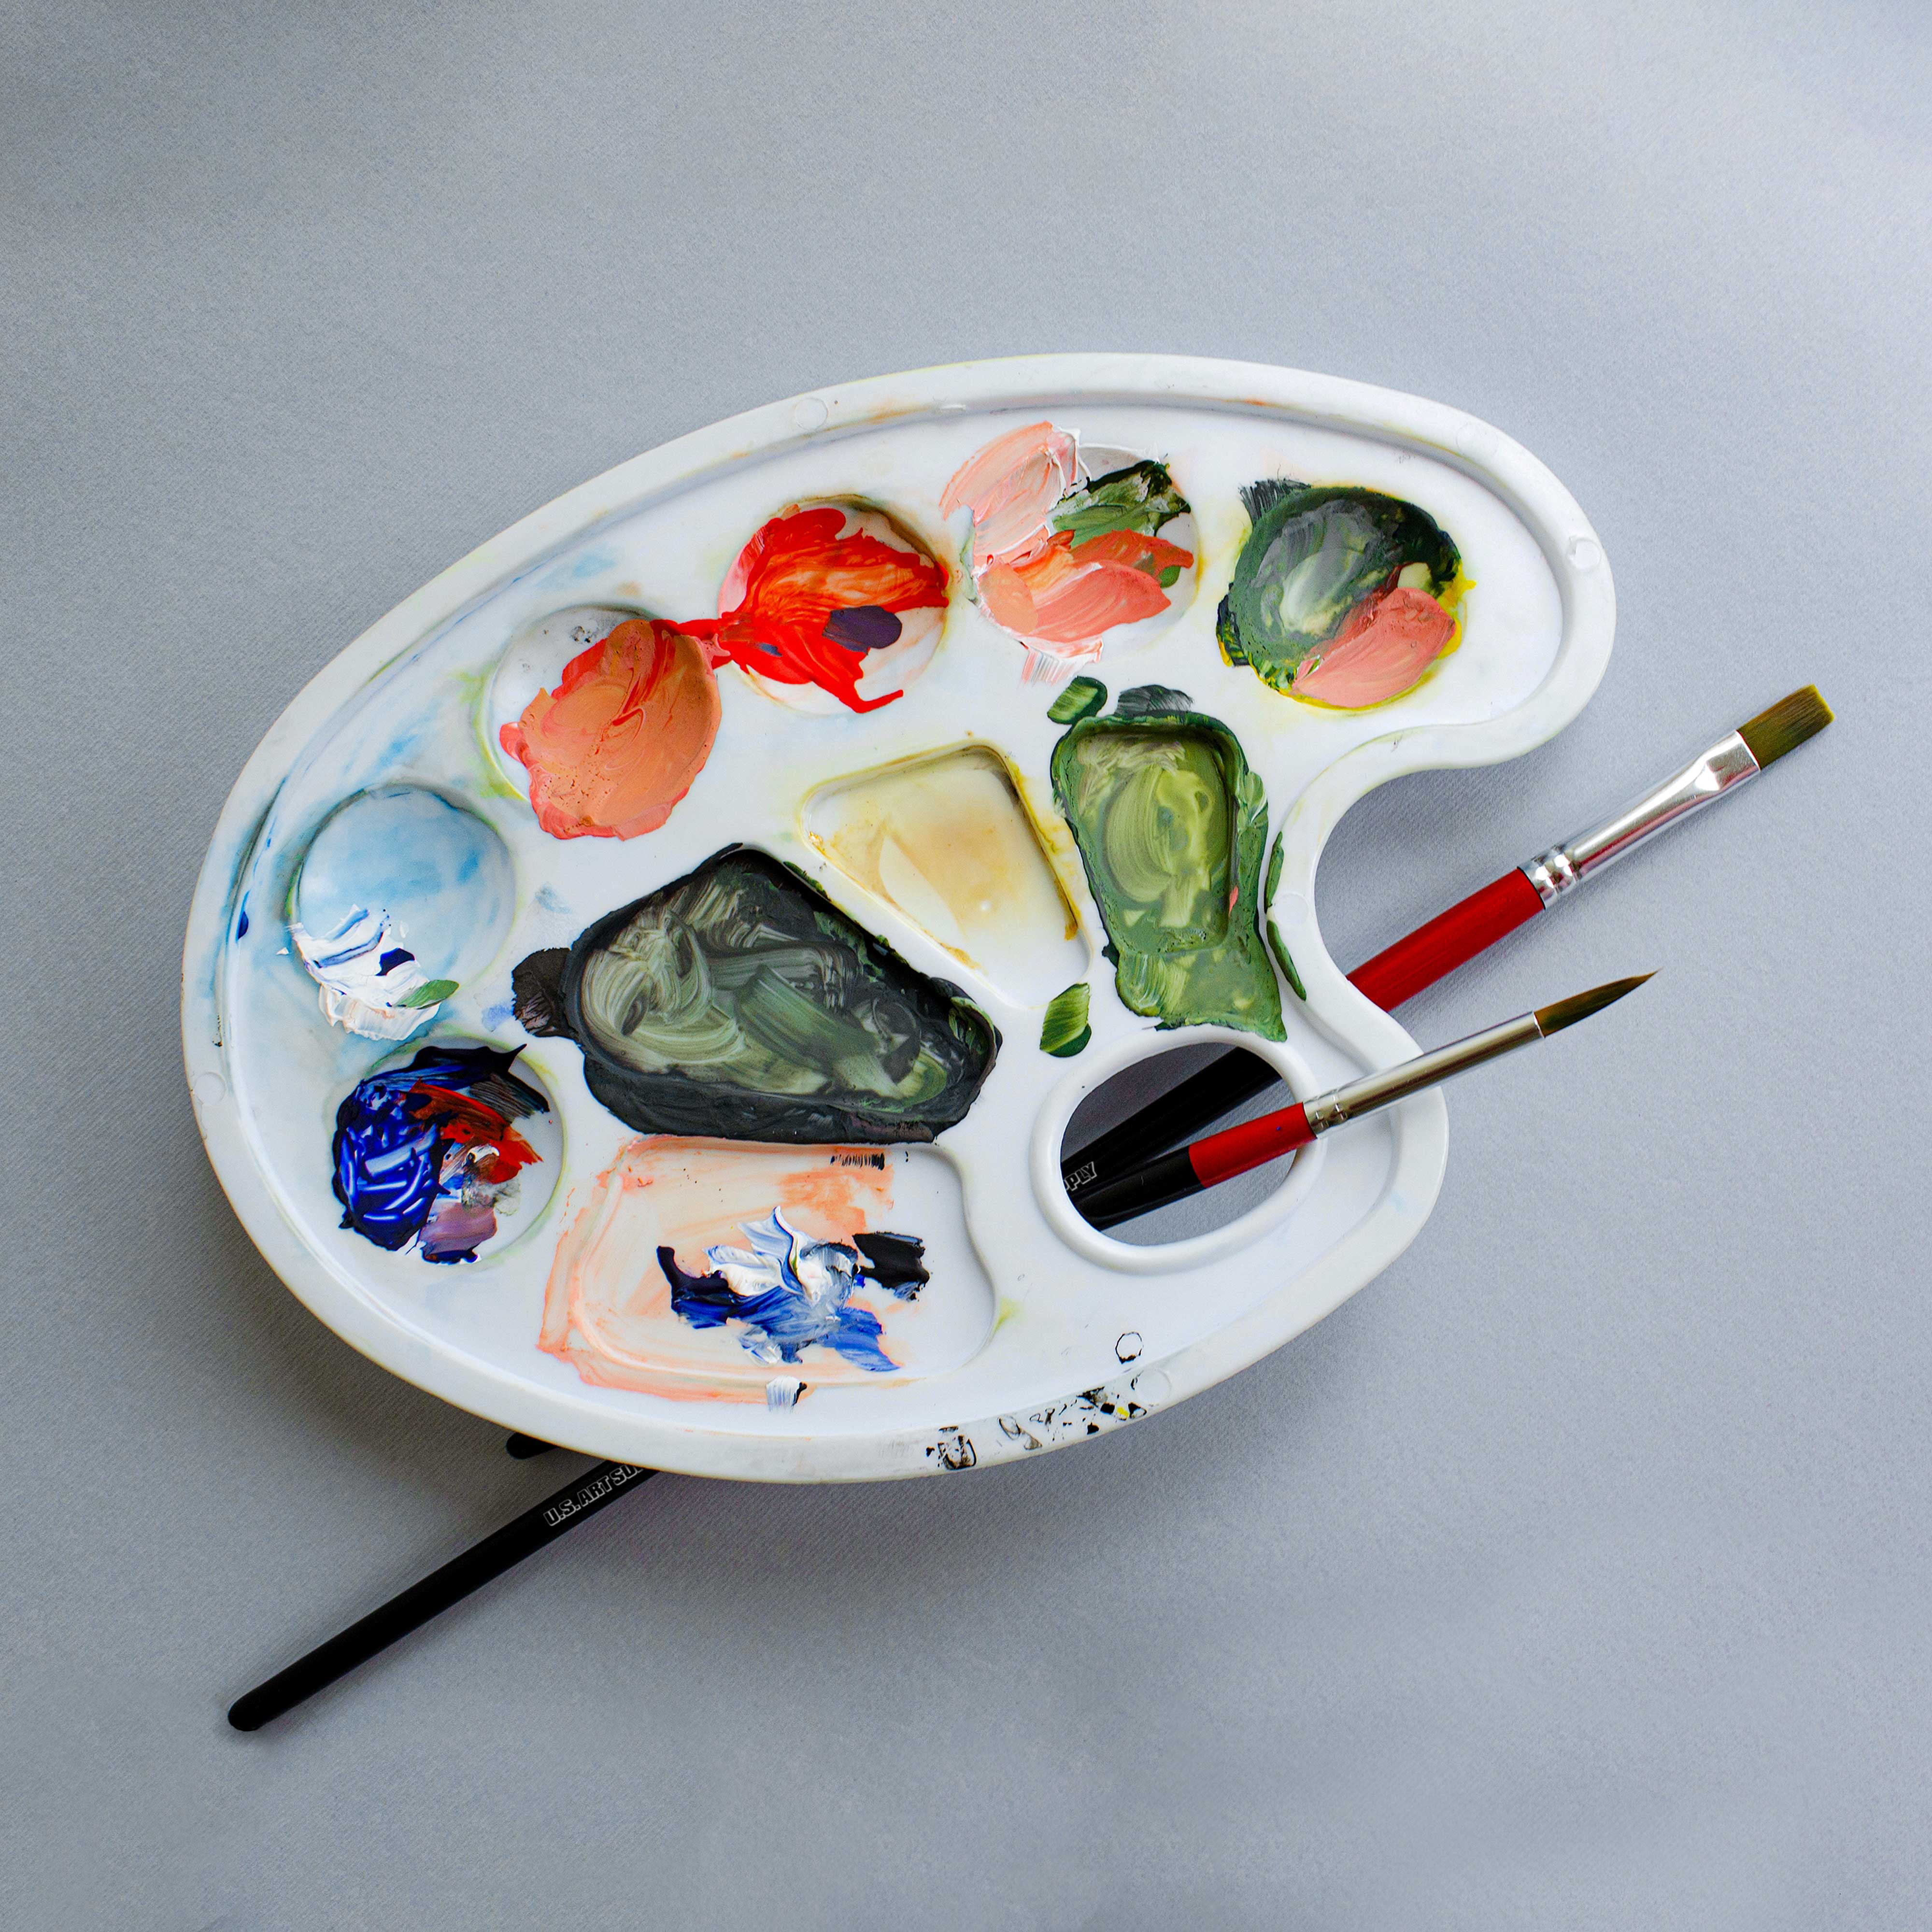 10Pcs Paint Pallet Tray, Painting Pallete, 10 Wells Color Mixing  Pallete/Paint Trays for Kids, Plastic Palette – FCLUB Art Supply